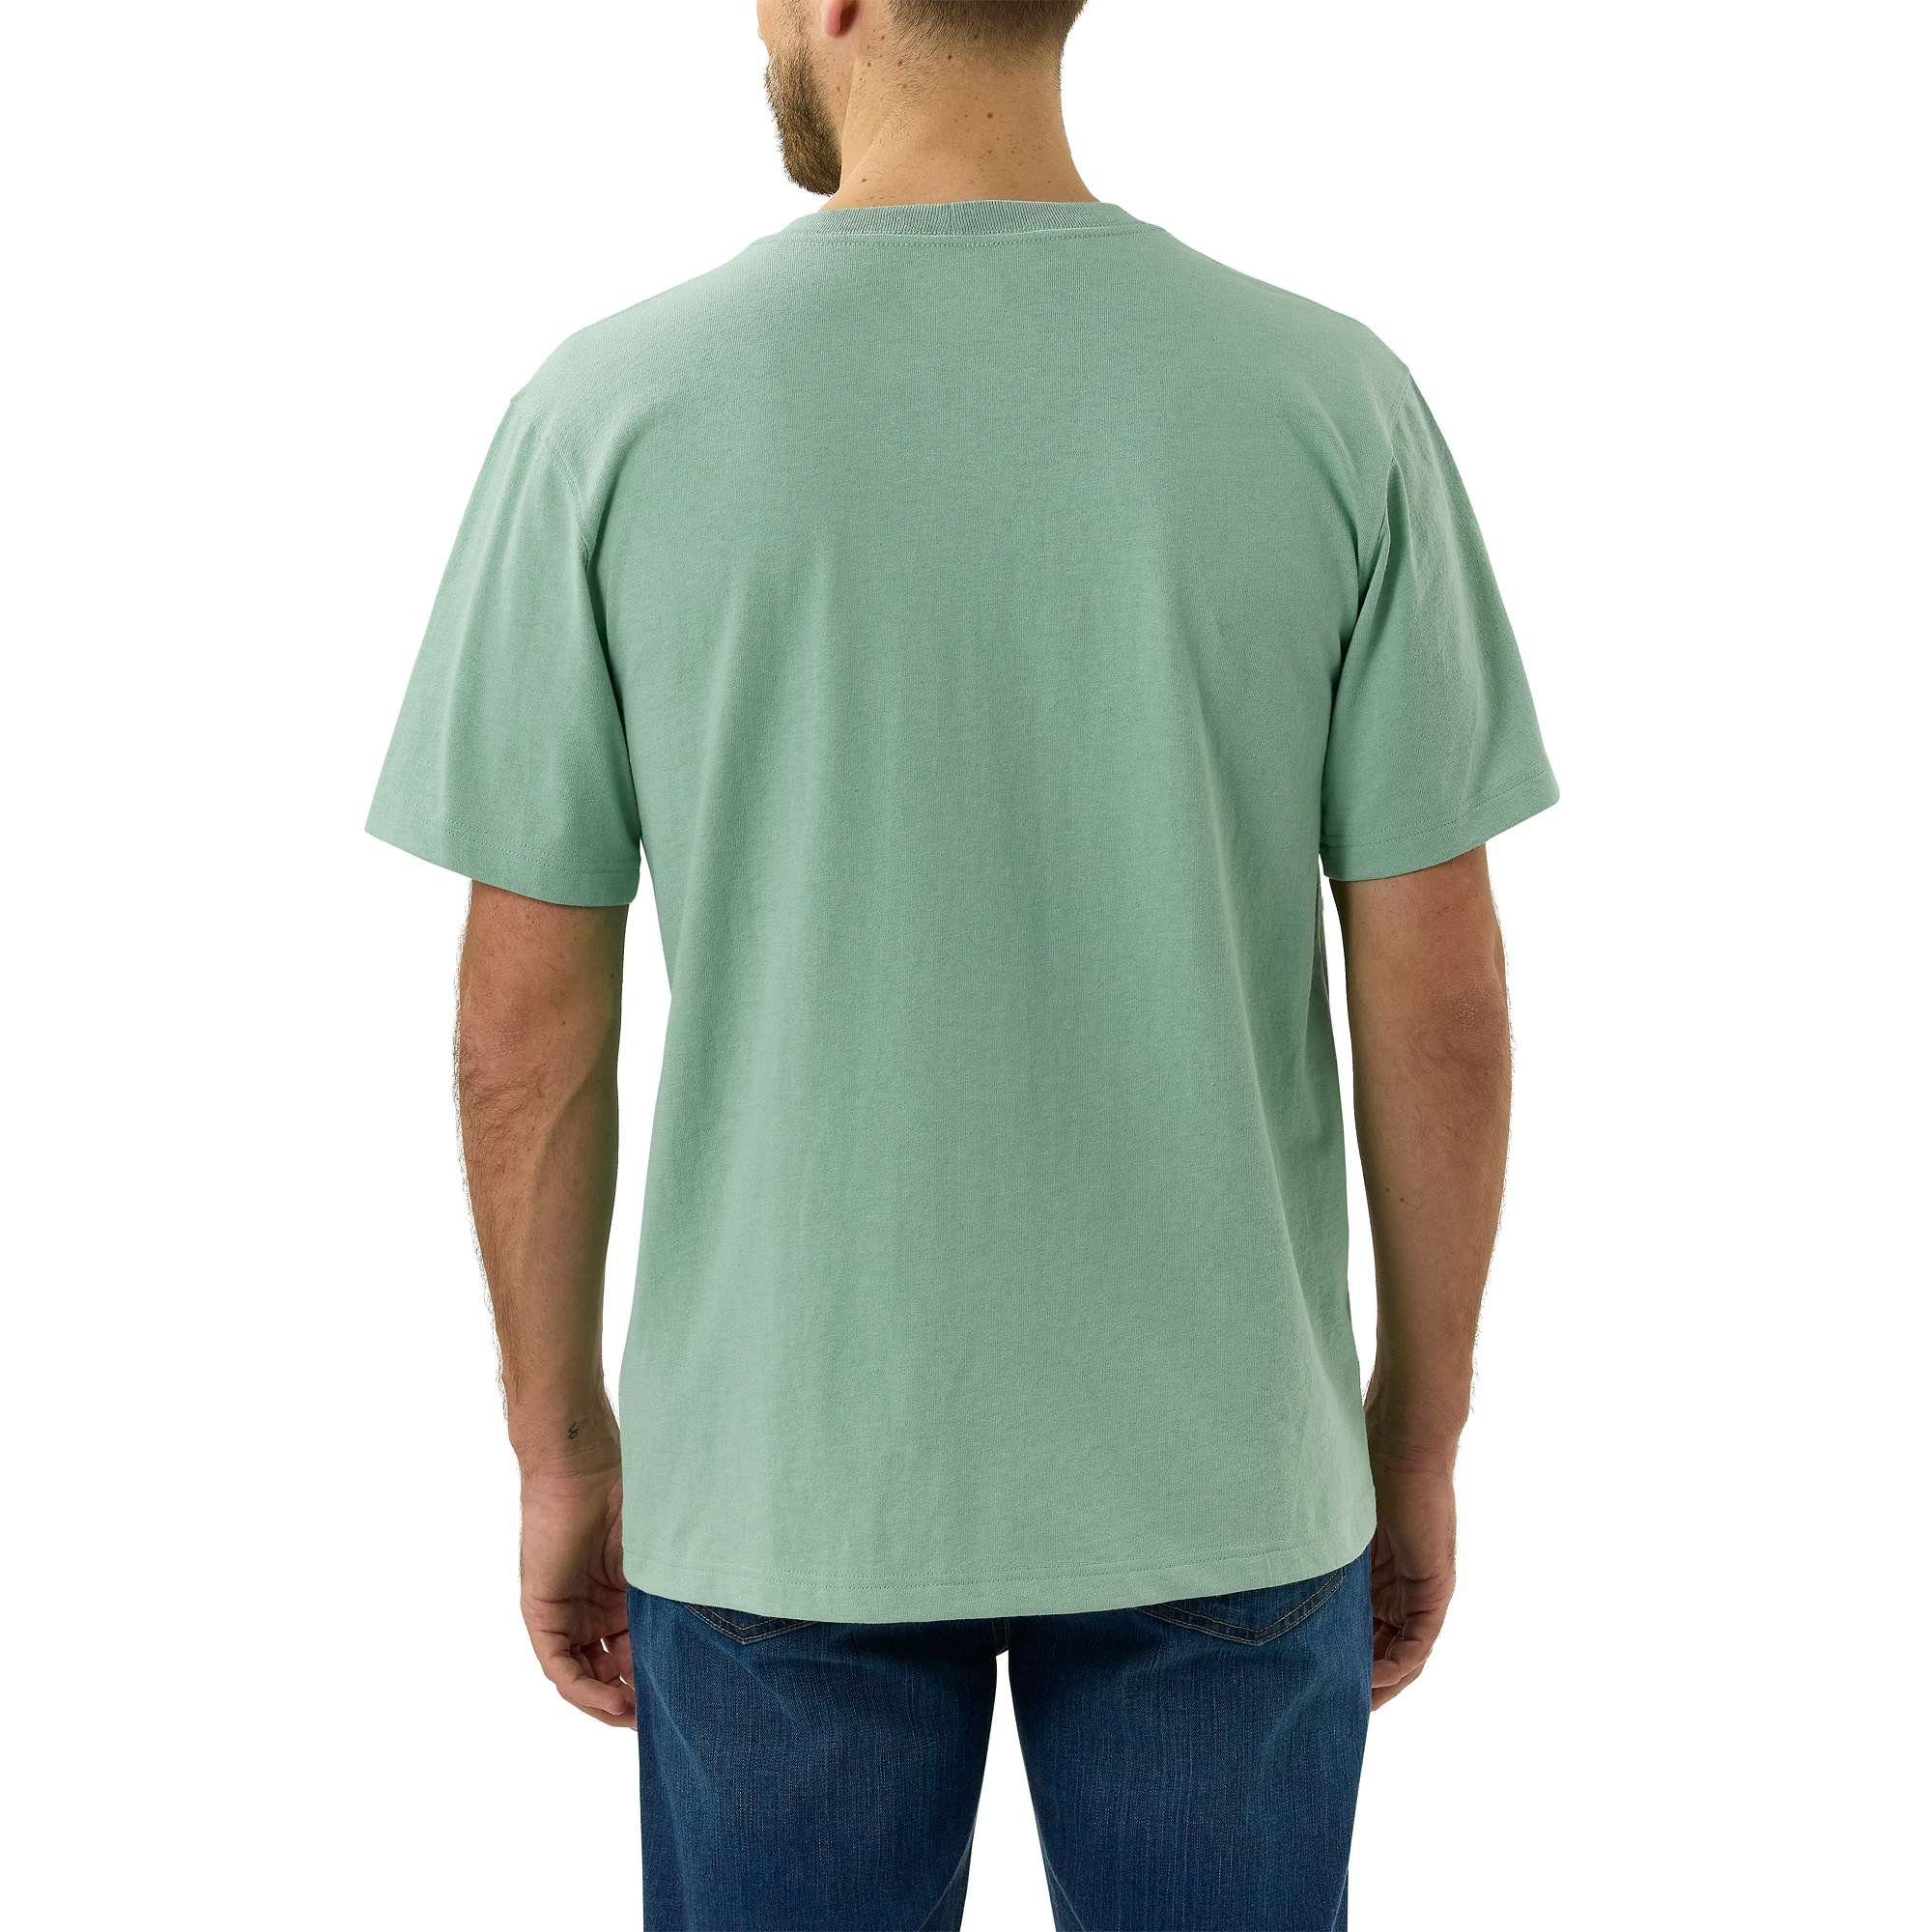 K87 Fit Pocket T-Shirt Carhartt Relaxed SeaGreen